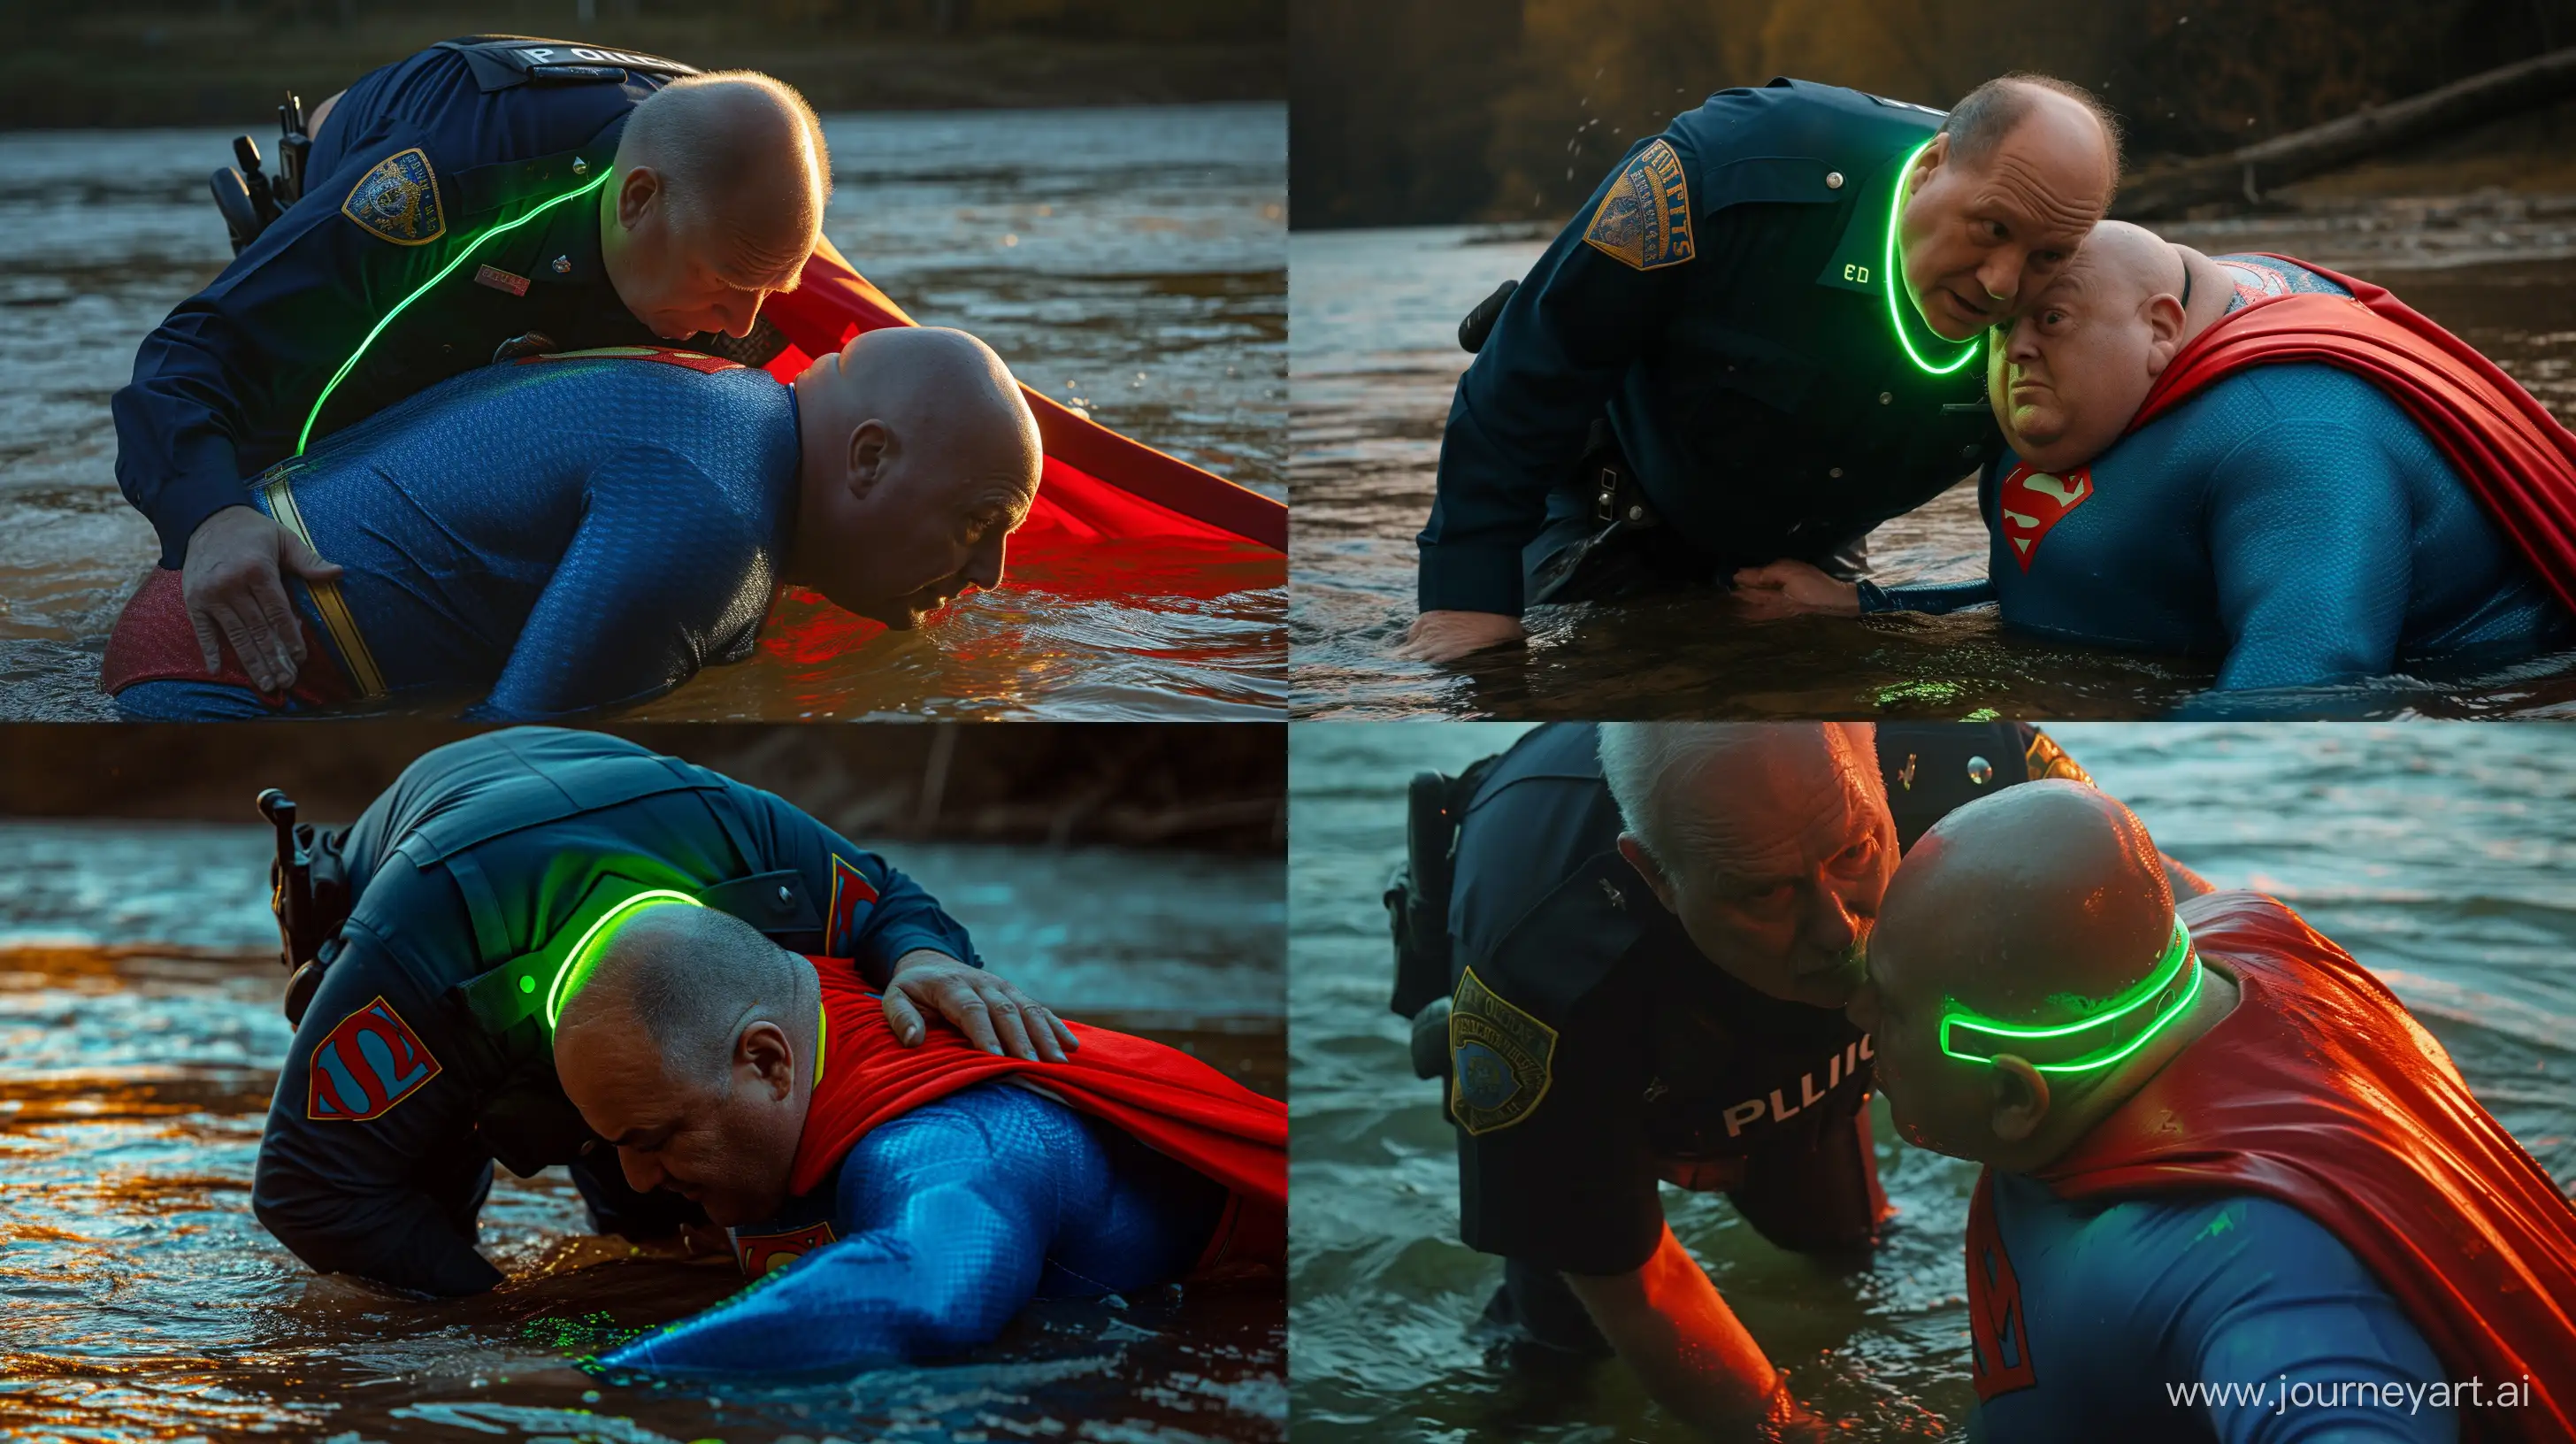 Eccentric-Scene-French-Policeman-Fastening-Neon-Dog-Collar-on-Vintage-Superman-in-River